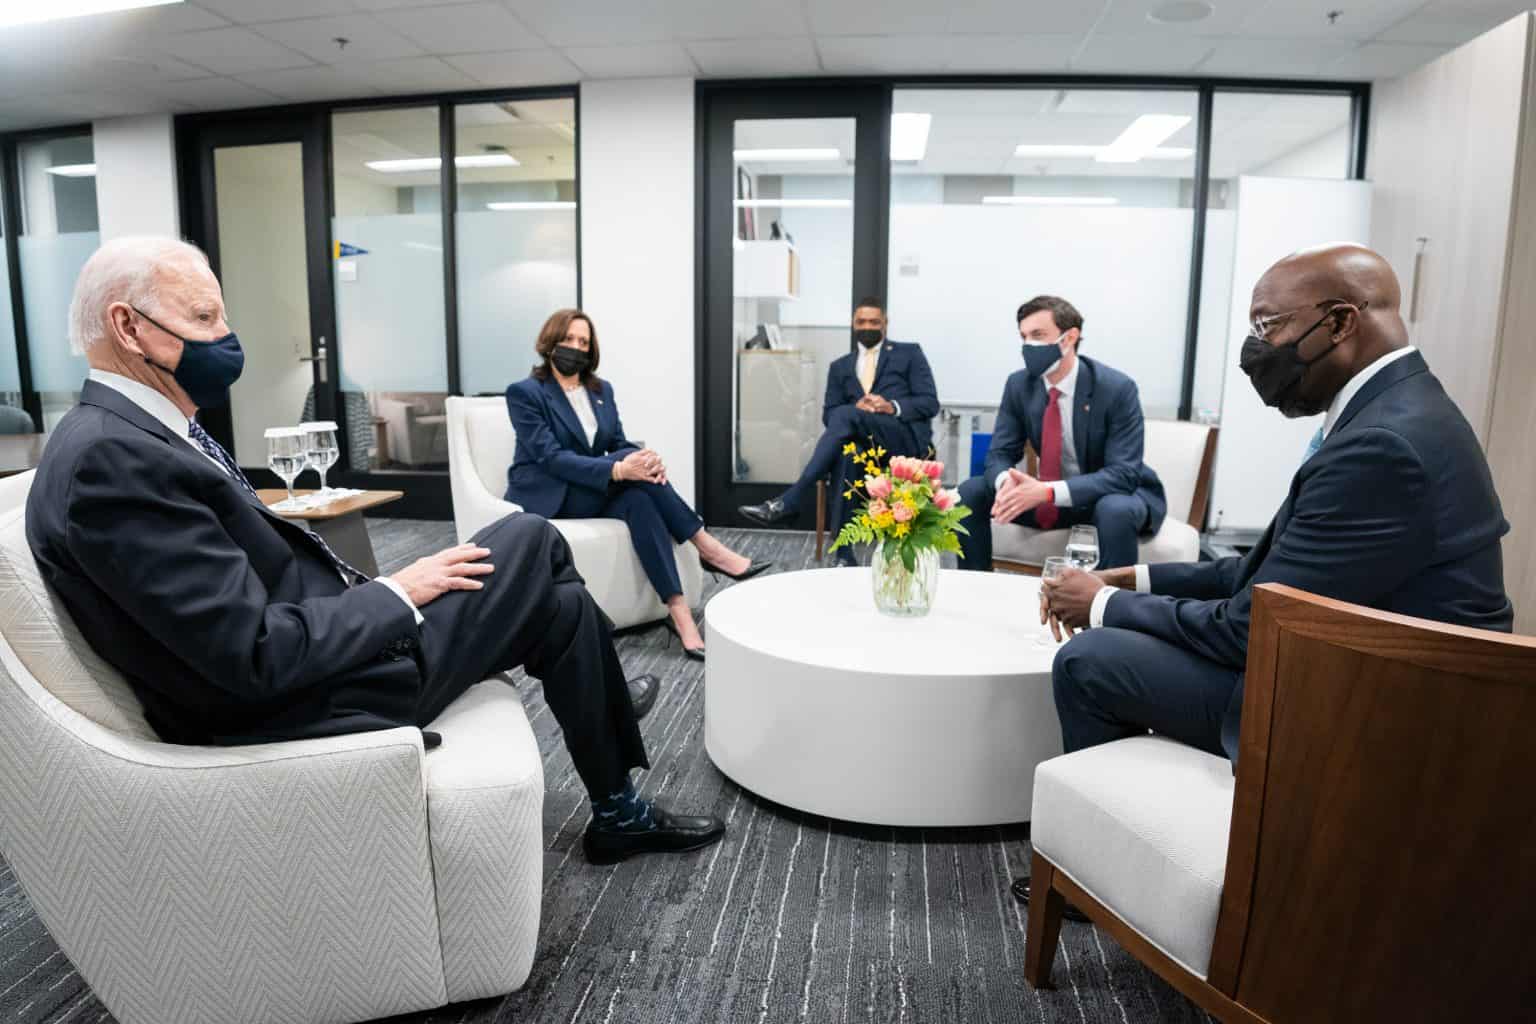 President Joe Biden, Vice President Kamala Harris, Senator Jon Ossoff, and Senator Reverend Raphael Warnock having a discussion around a white circular table with flowers in a vase.